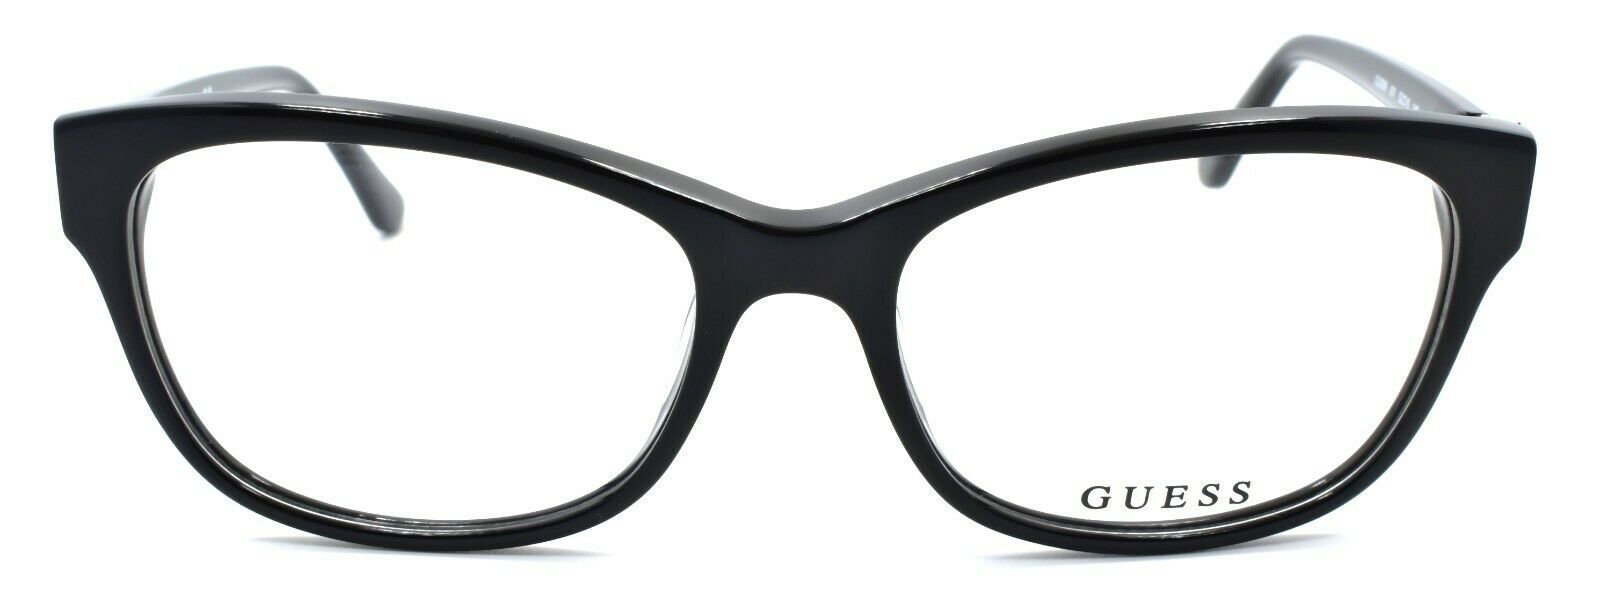 2-GUESS GU2696 001 Women's Eyeglasses Frames 54-16-140 Black-889214031754-IKSpecs